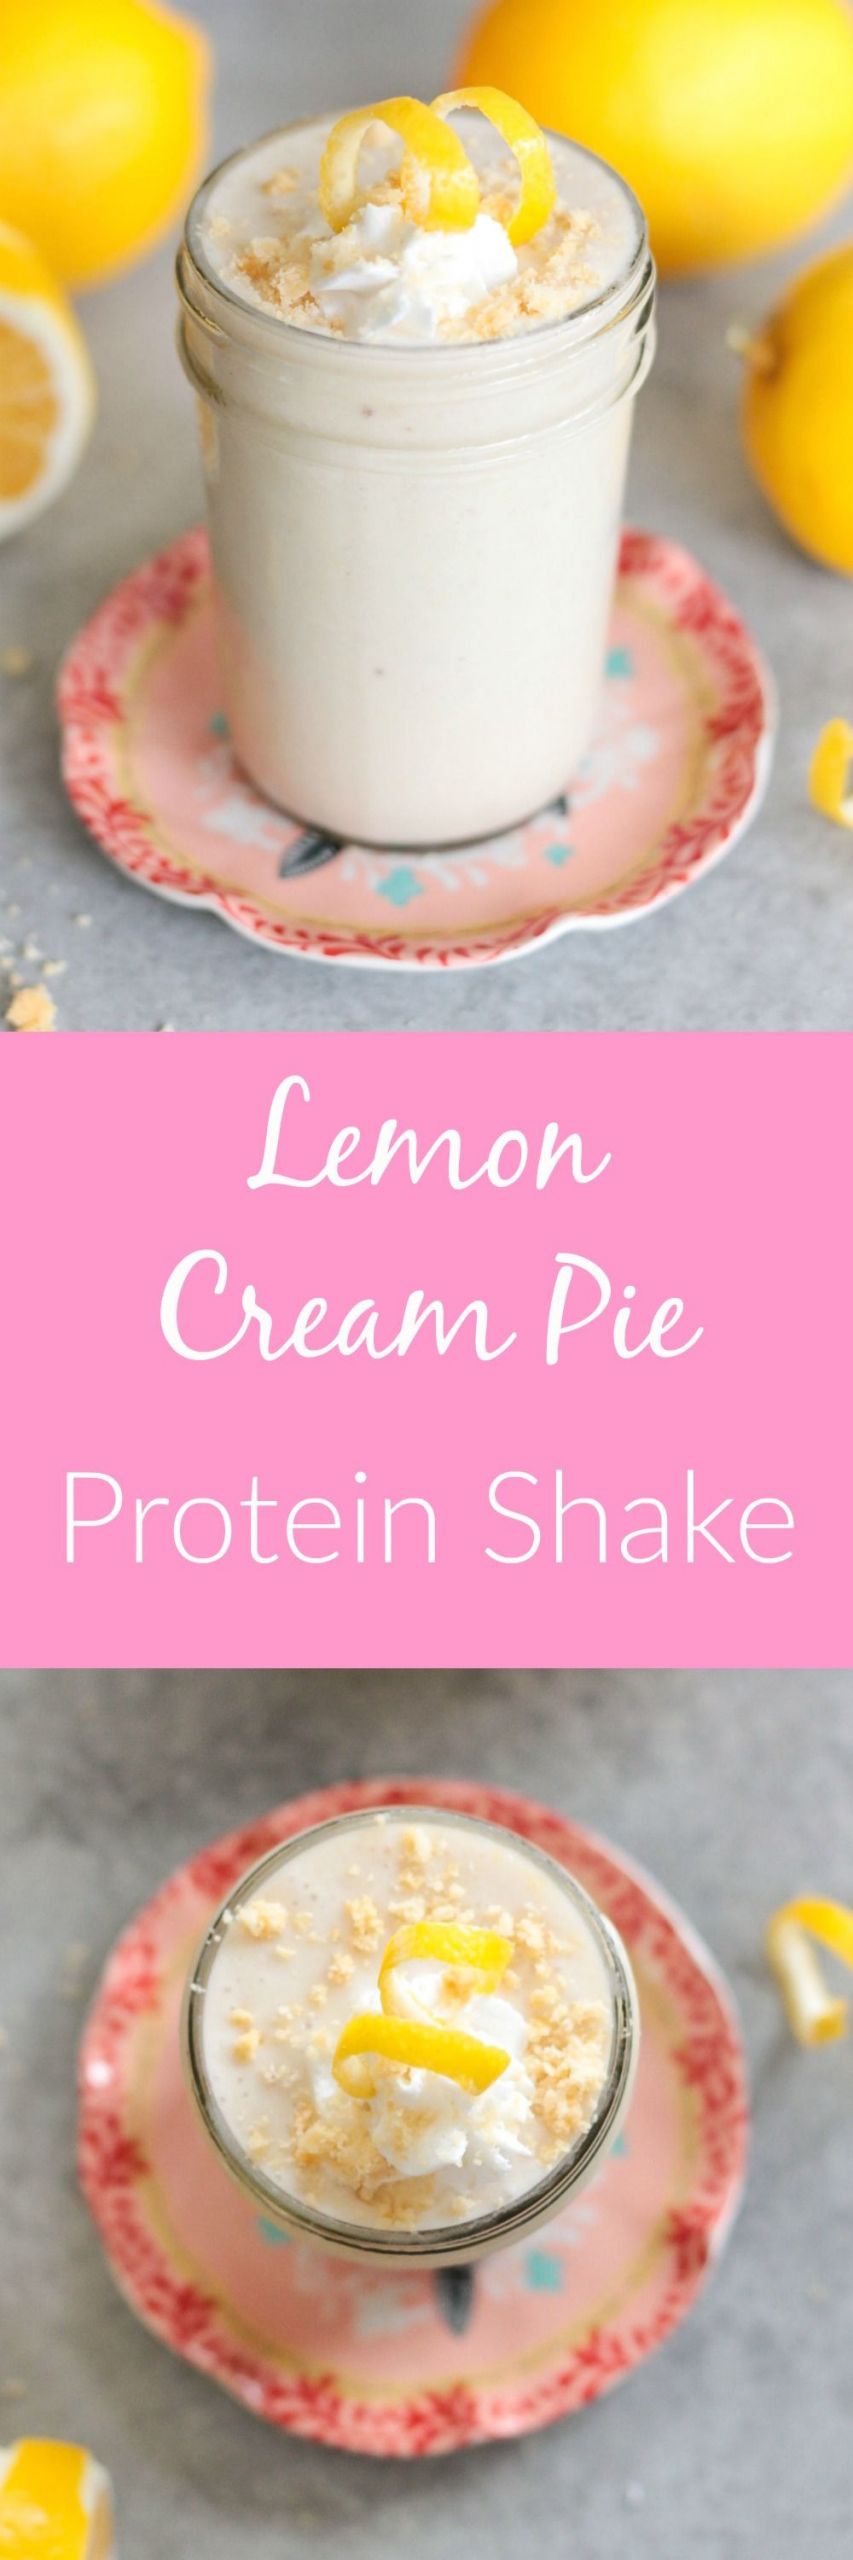 Vegetarian Protein Shake Recipe
 Lemon Pie Protein Shake Recipe